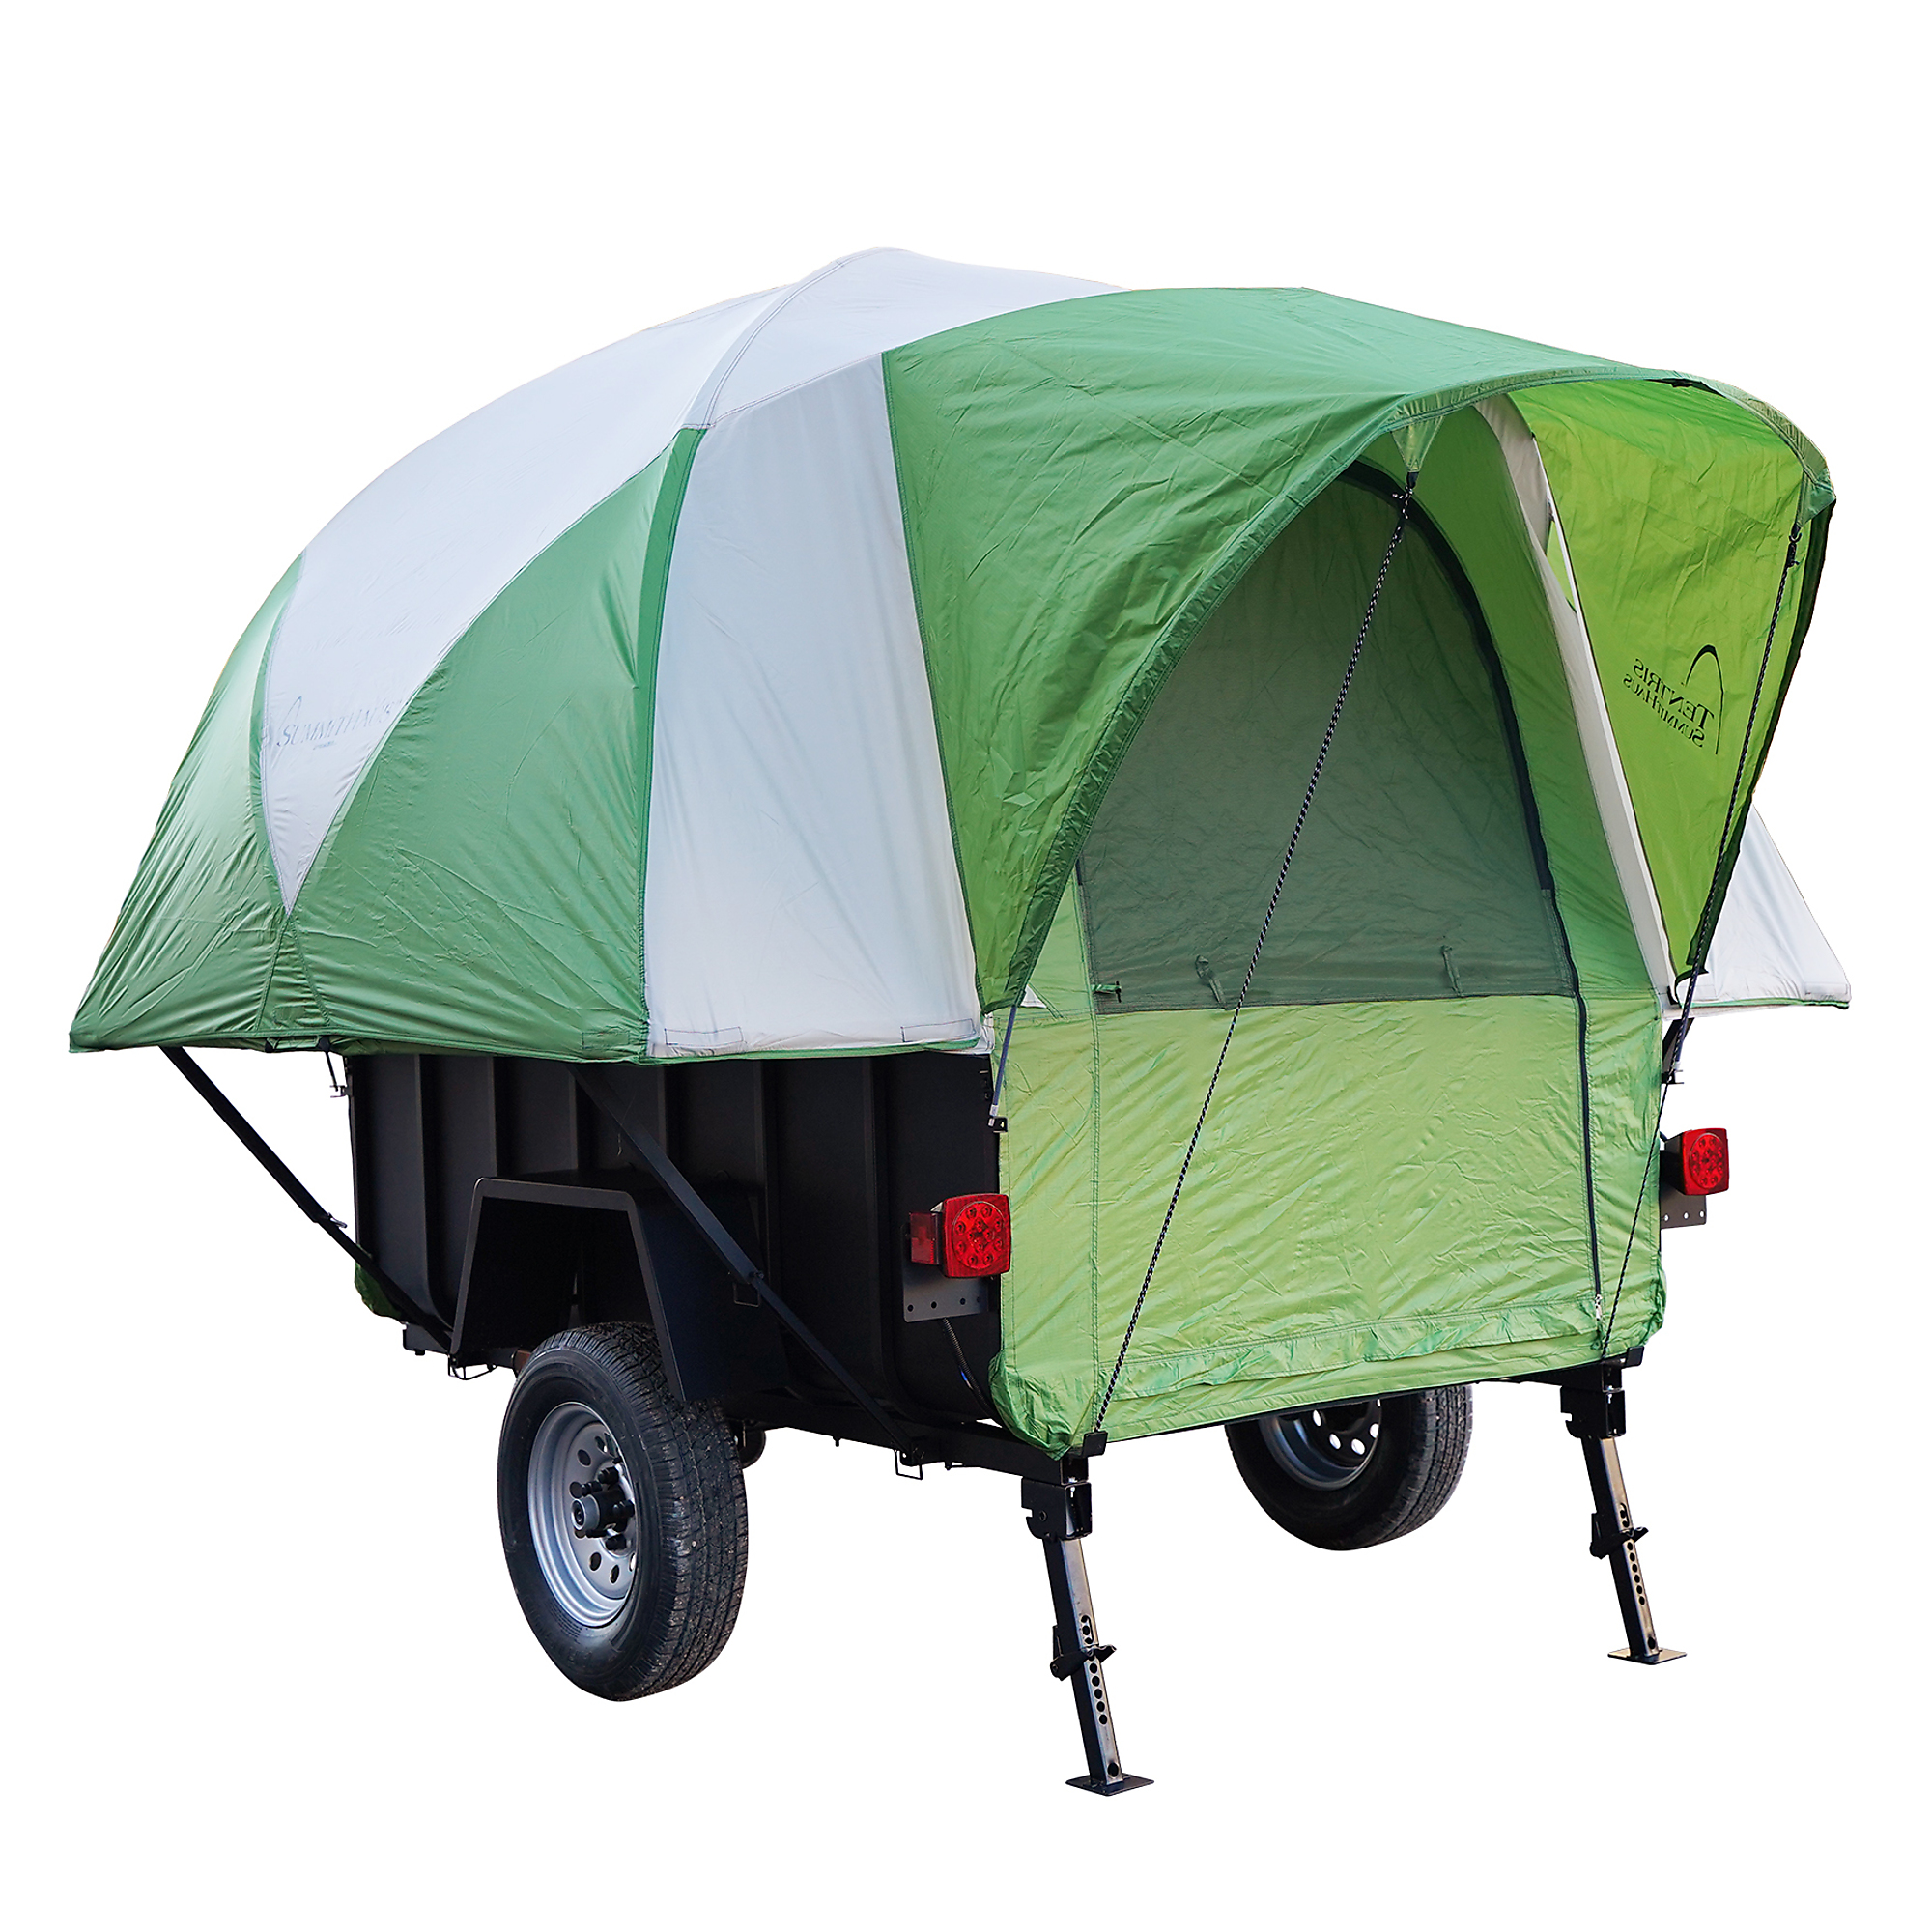 Let's Go Aero, LittleGiant SummitHaus Camping Trailer, Length 10 ft, Width 8 ft, Sleeps 4, Model T02035-01410